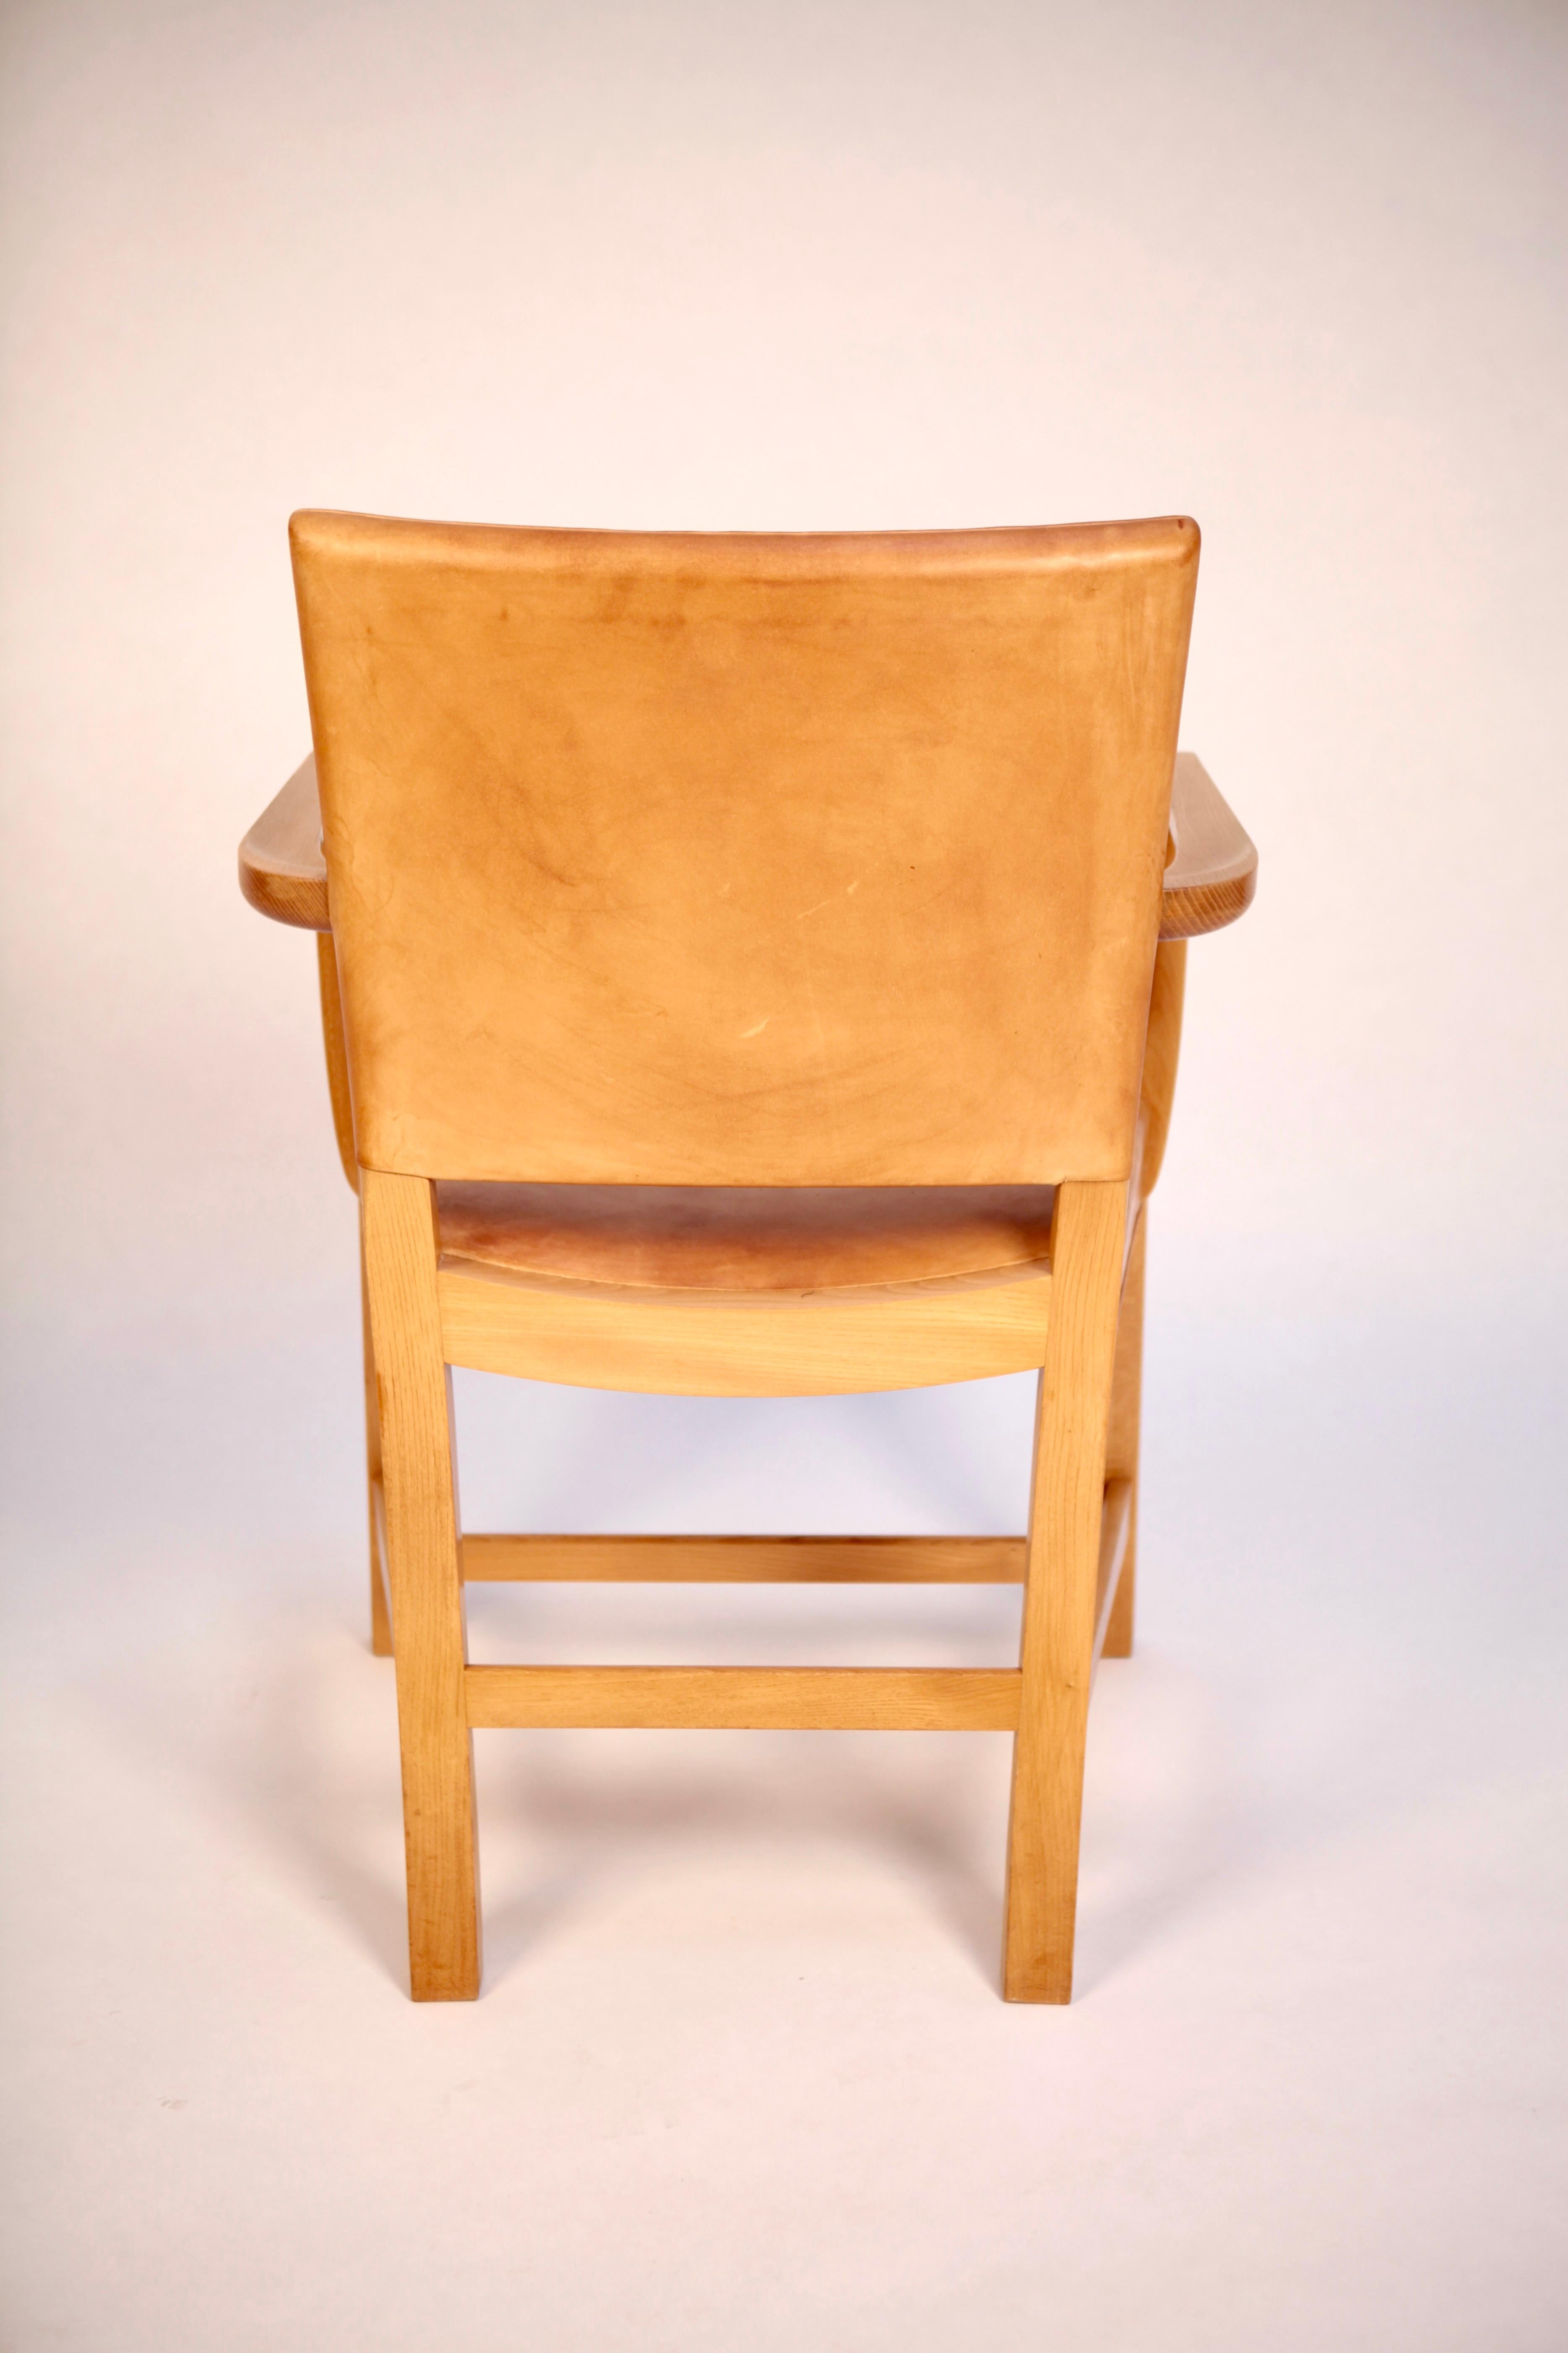 Leather Kaare Klint, 'Barcelona' Dining Chair, Model 3758